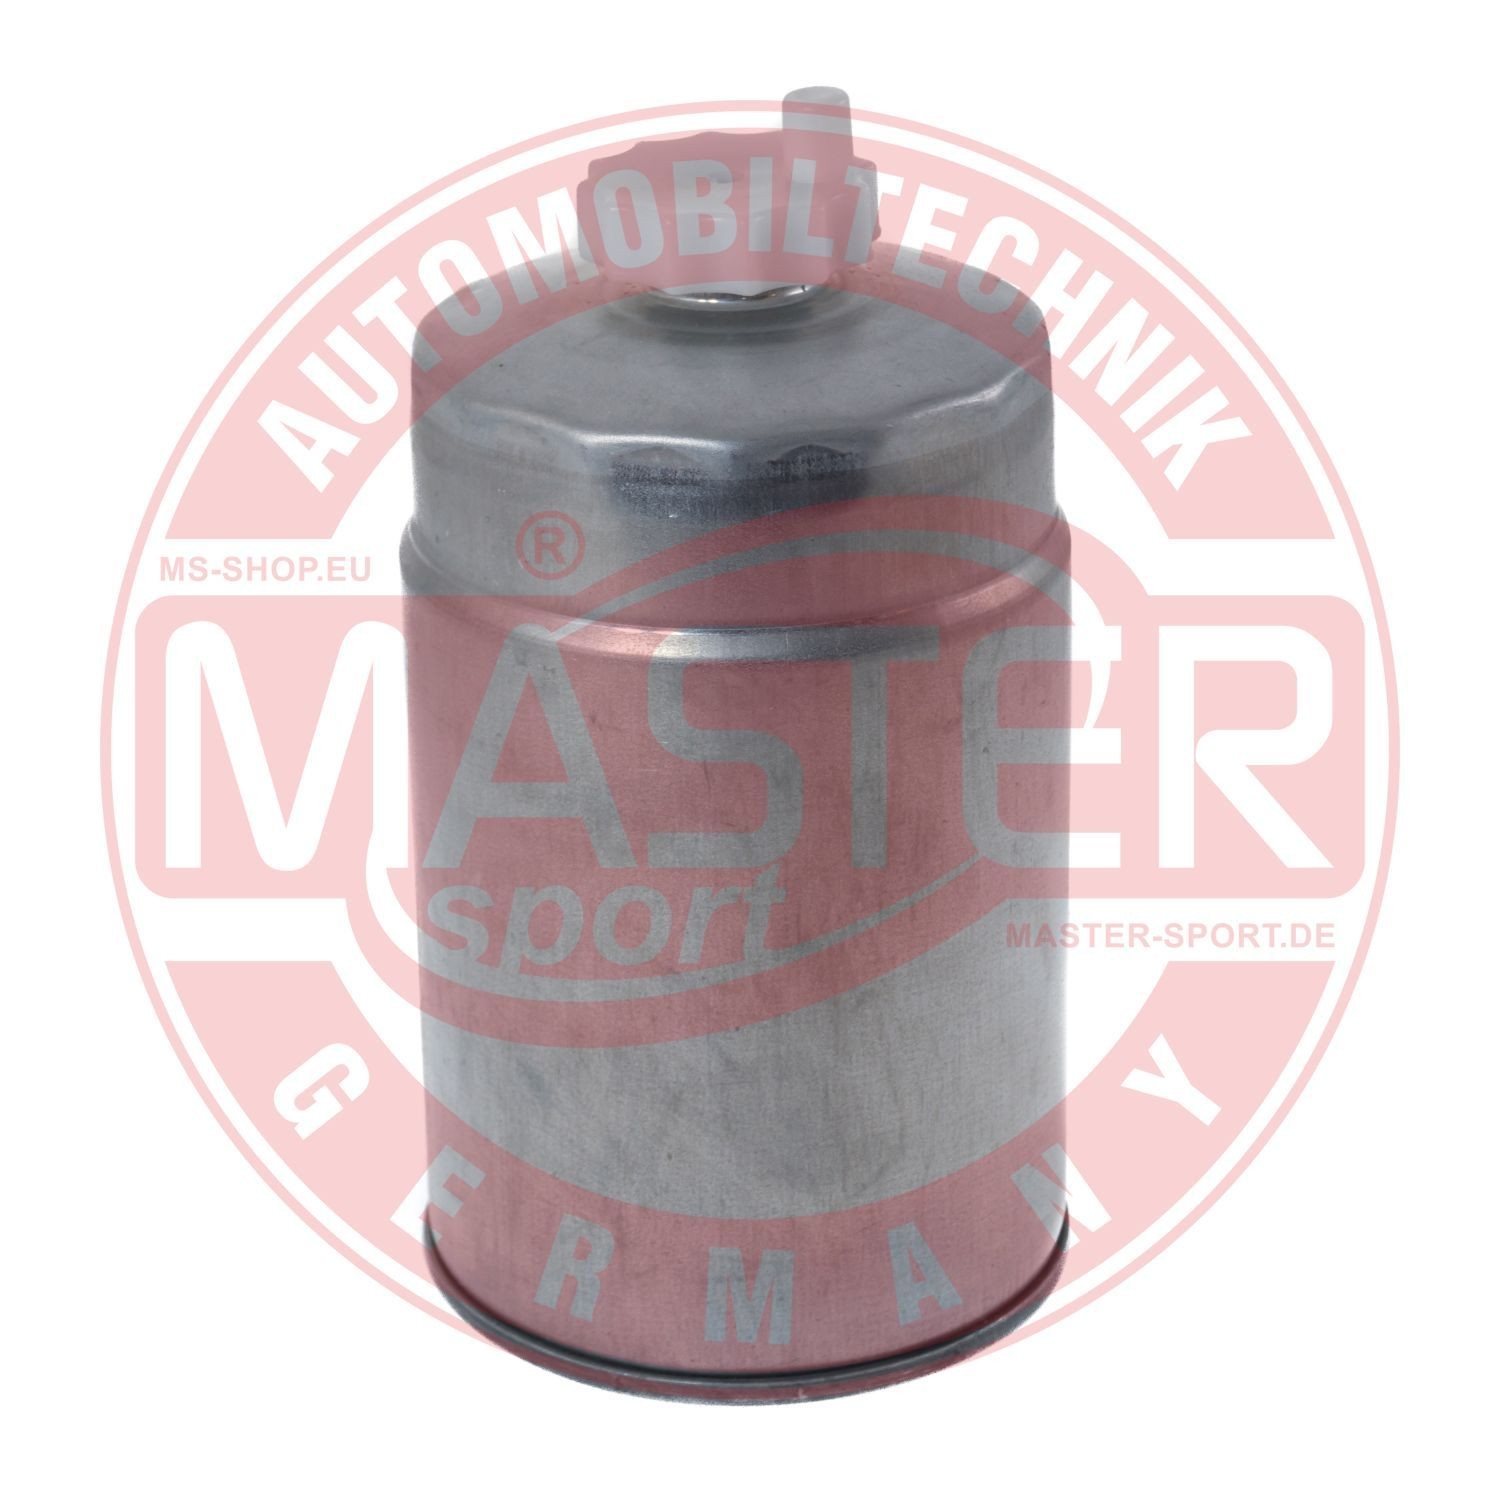 Original MASTER-SPORT 430085380 Fuel filter 853/8-KF-PCS-MS for BMW 3 Series